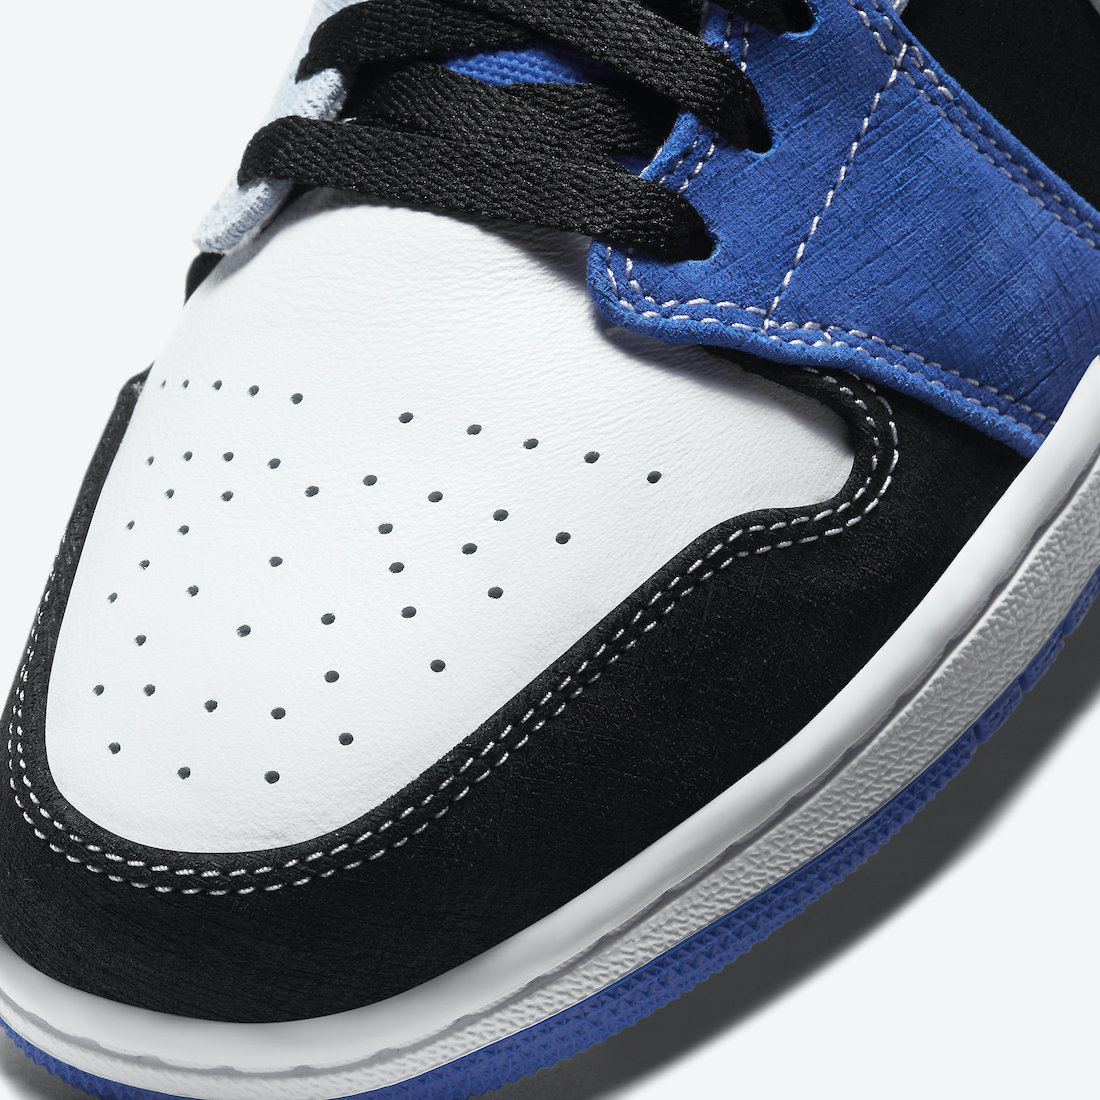 Air Jordan 1 Low Blue Black White DH0206-400 Release Date Info